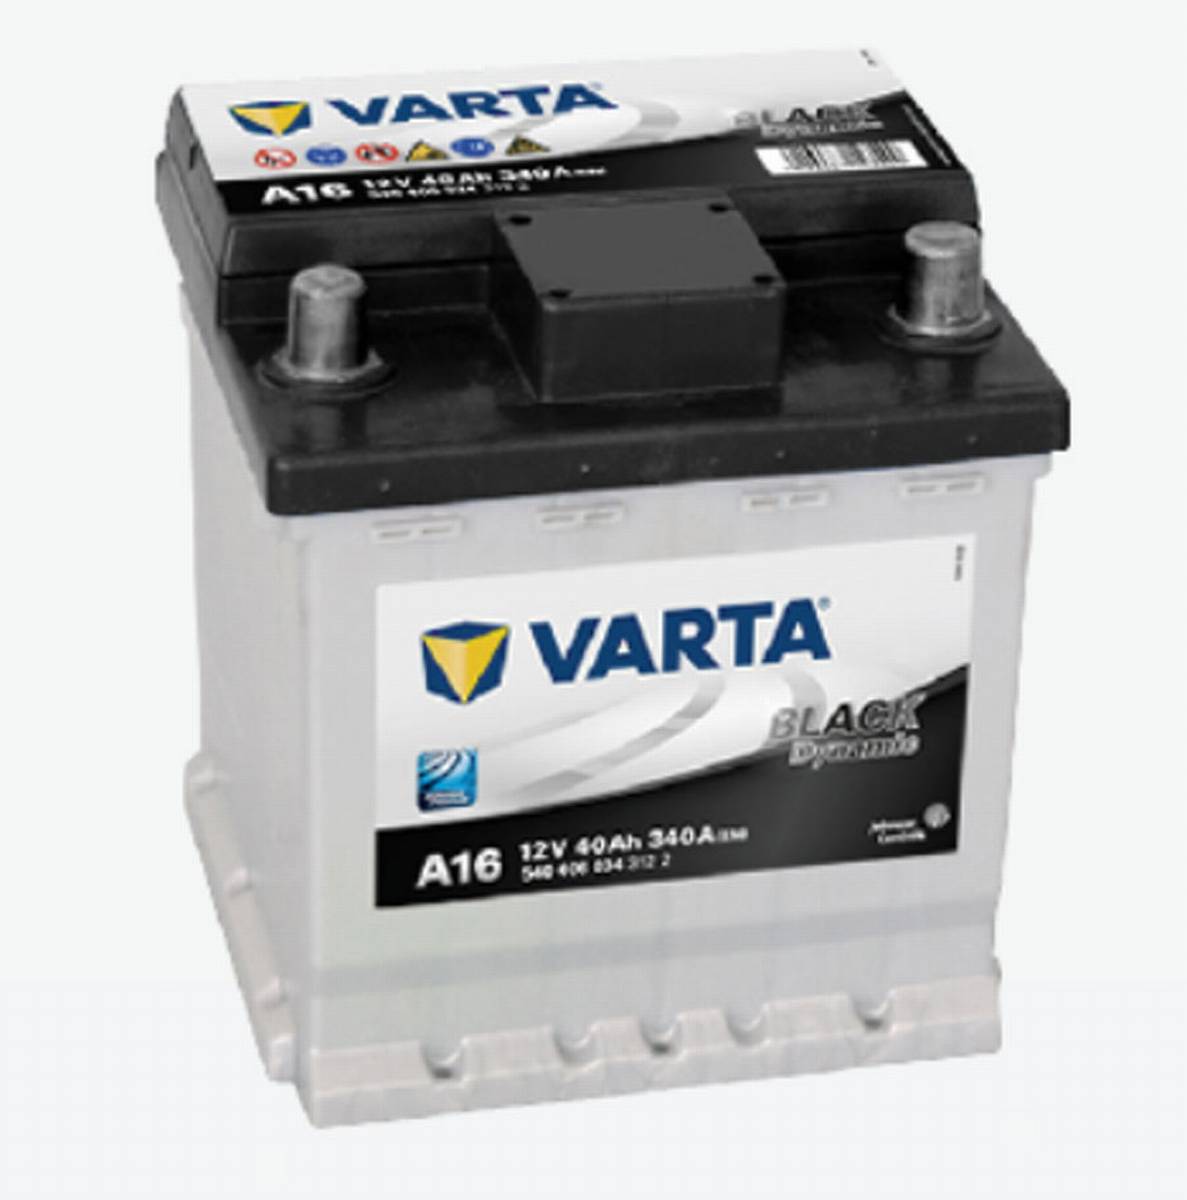 VARTA A16 Black Dynamic 12V 40Ah 340A Autobatterie 540 406 034